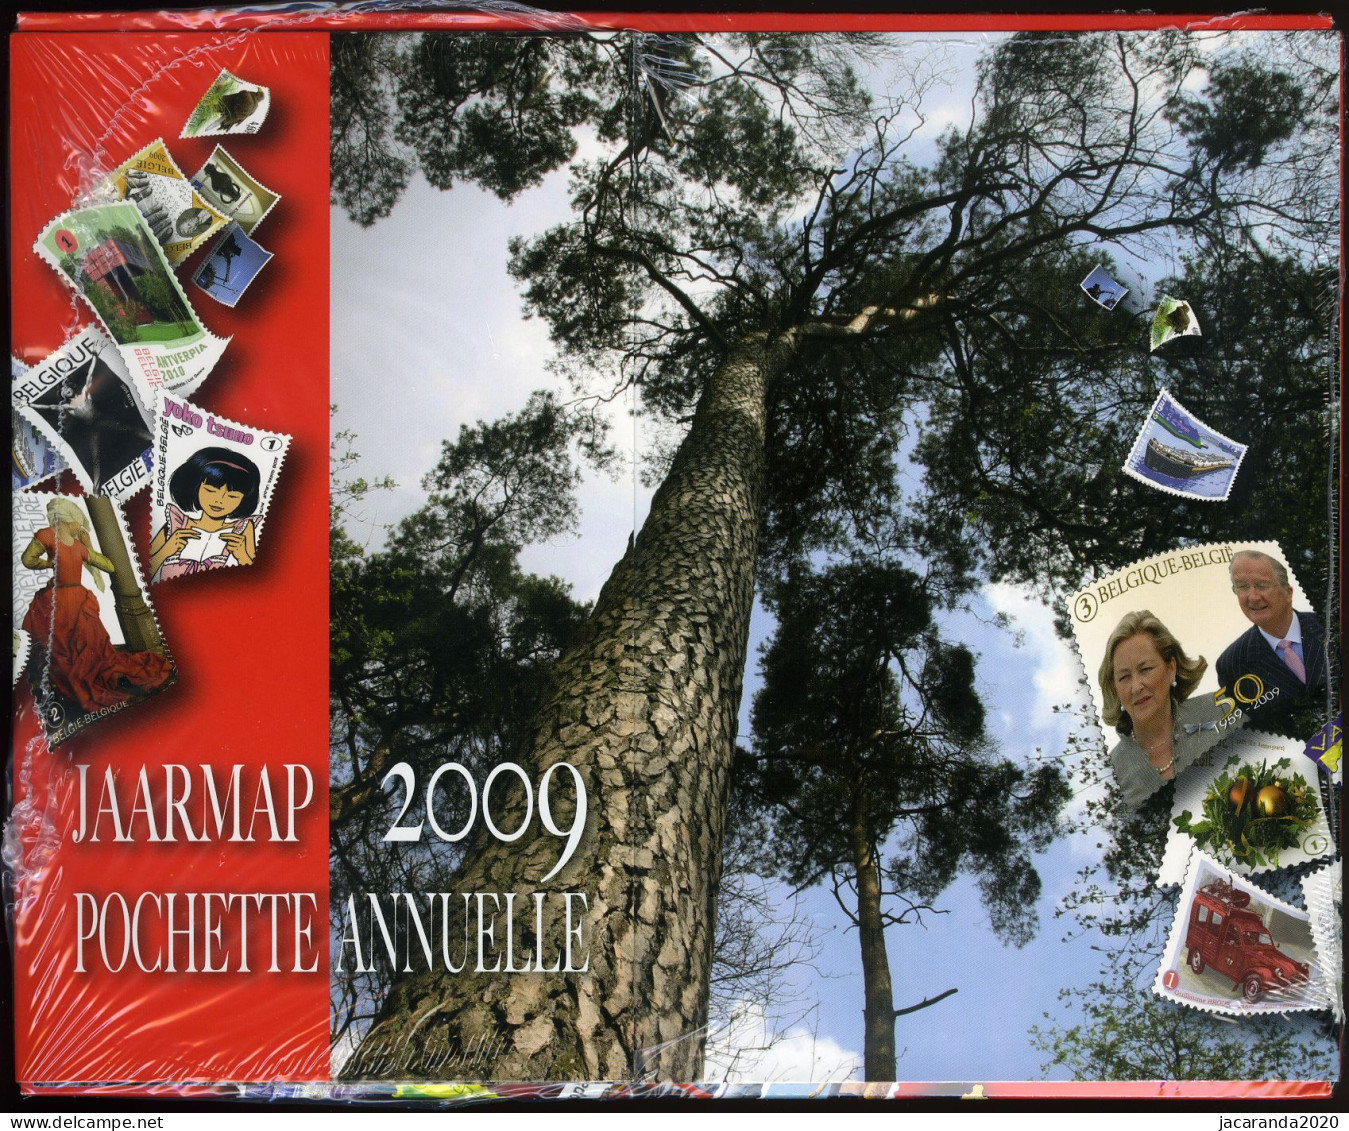 België 2009 - Jaarmap - Pochette Annuelle - Met Zwart-wit Velletje Van Europa - Originele Verpakking - Scellé - Sealed - Full Years